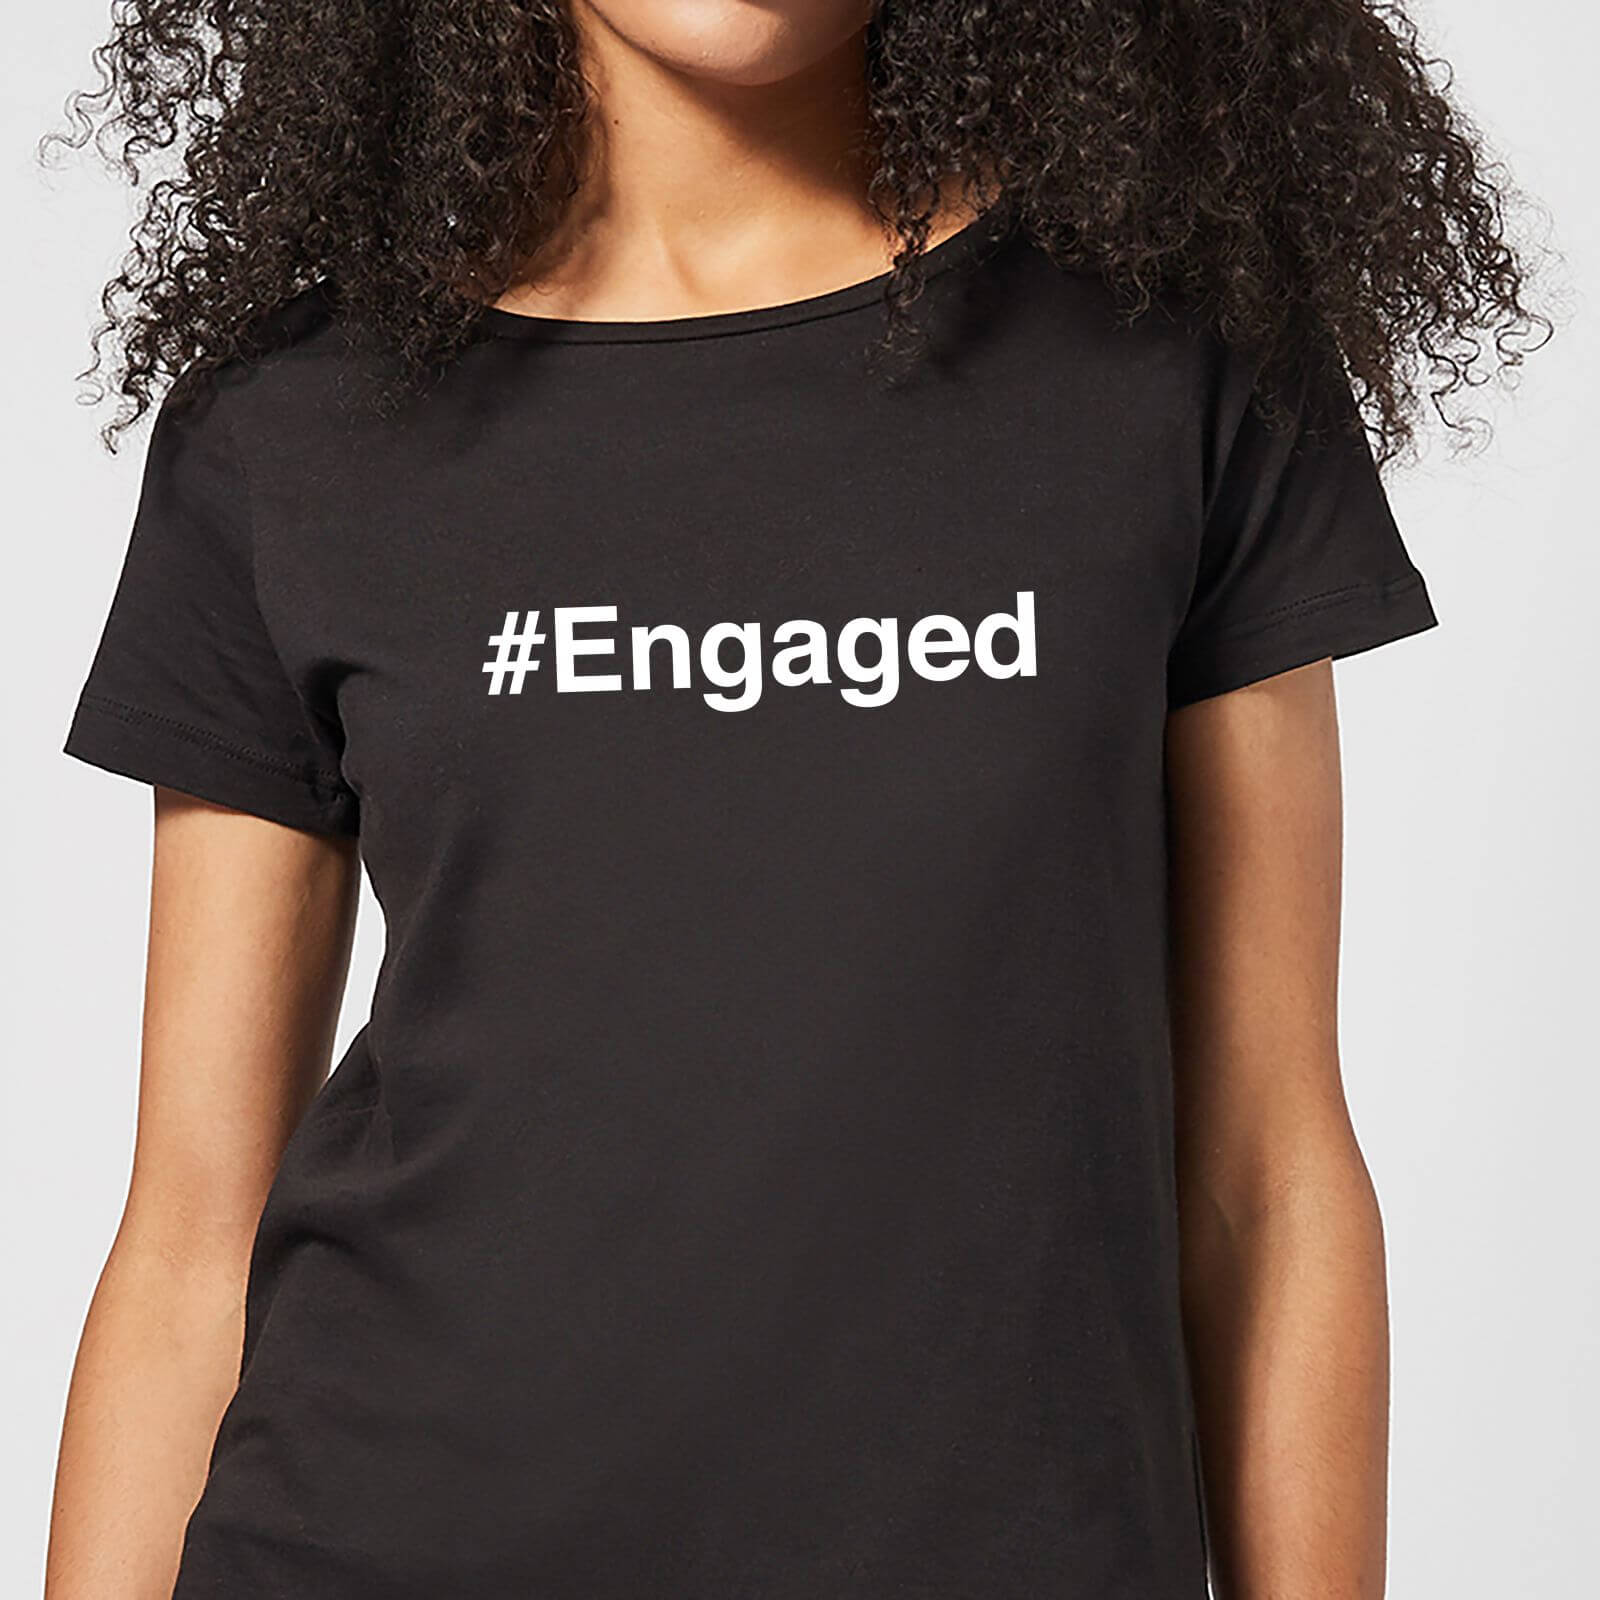 Engaged Women's T-Shirt - Black - L - Black